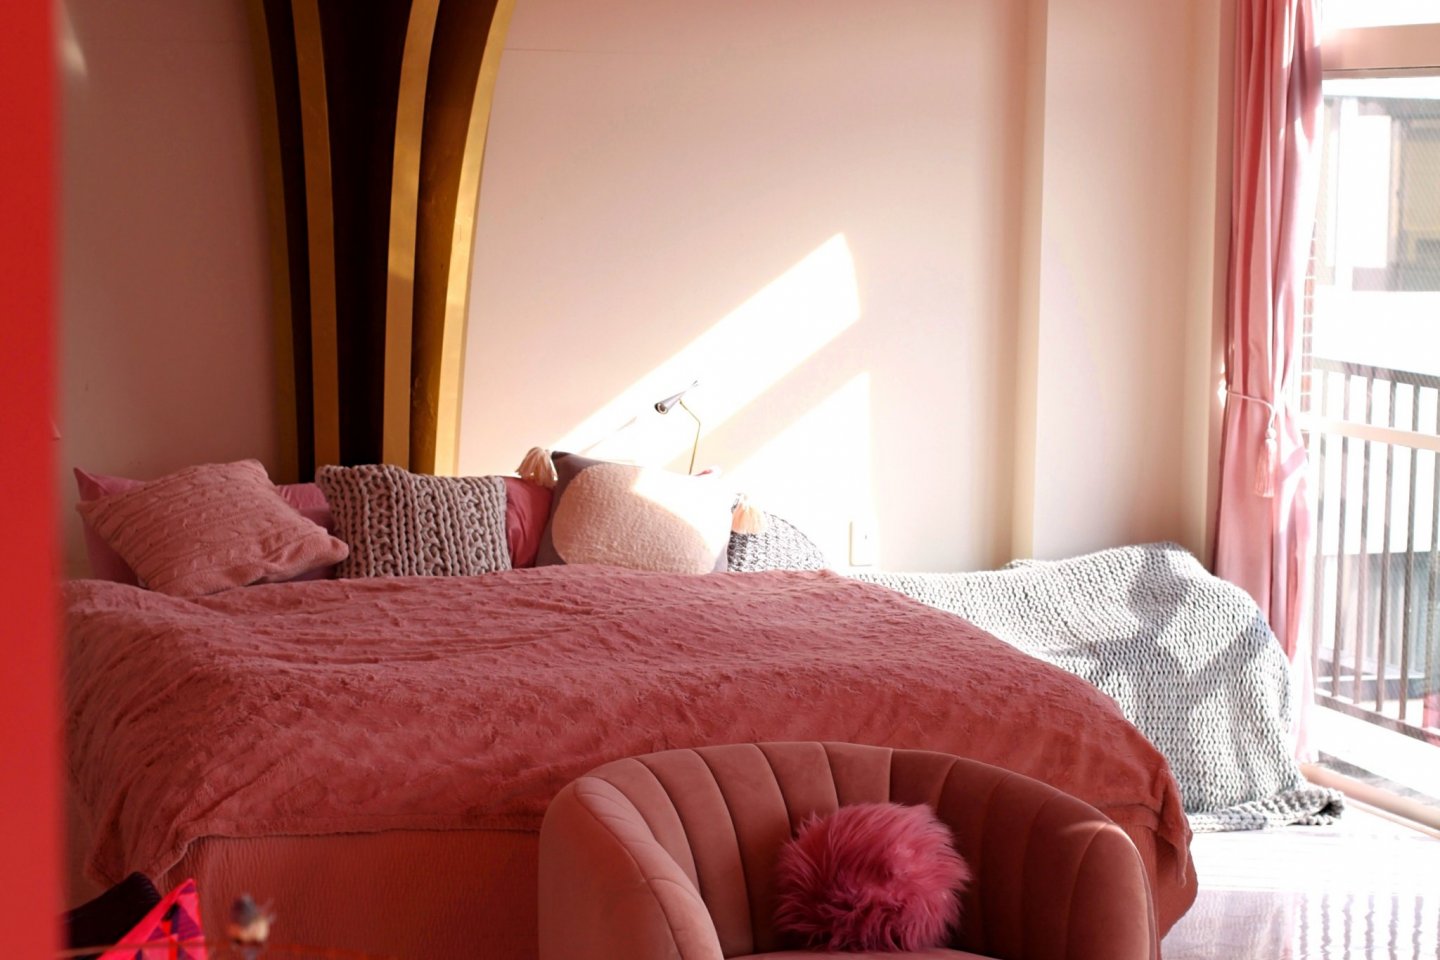 Plush luxury bed with dramatic sakura installation